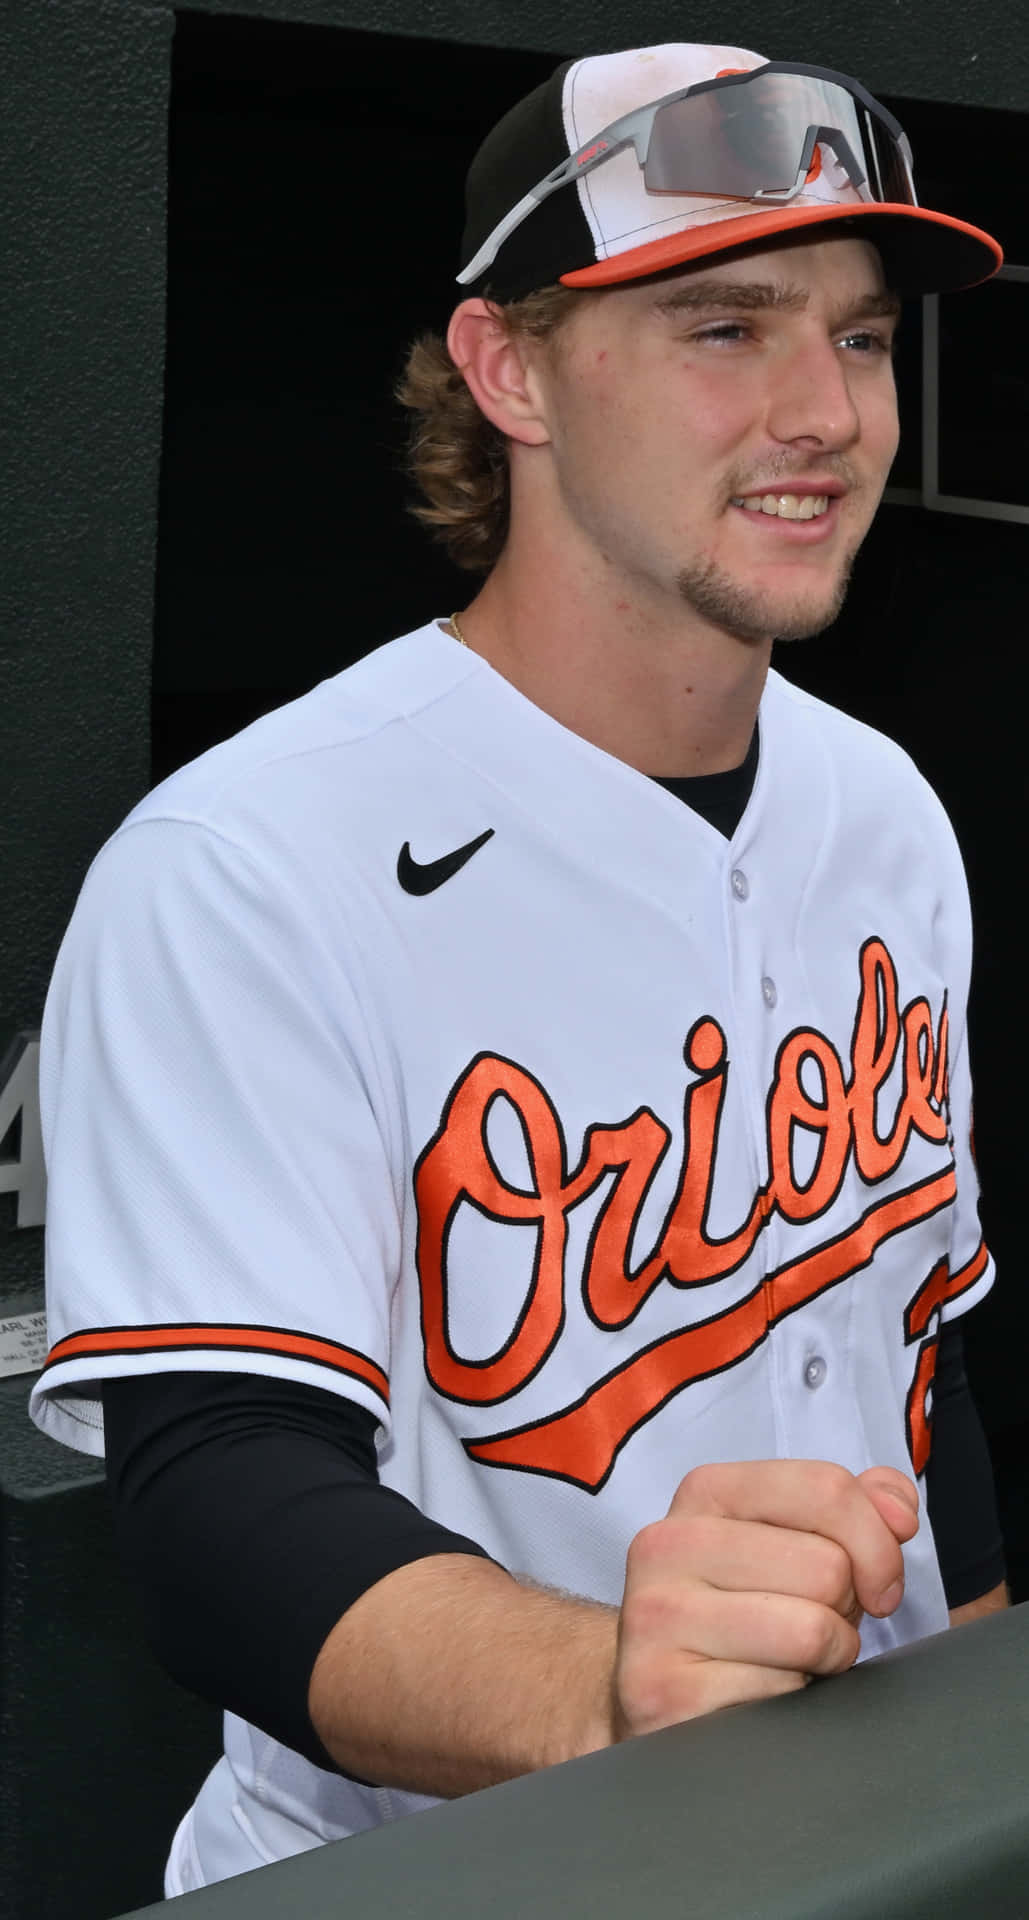 Baseball Player Orioles Uniform Wallpaper